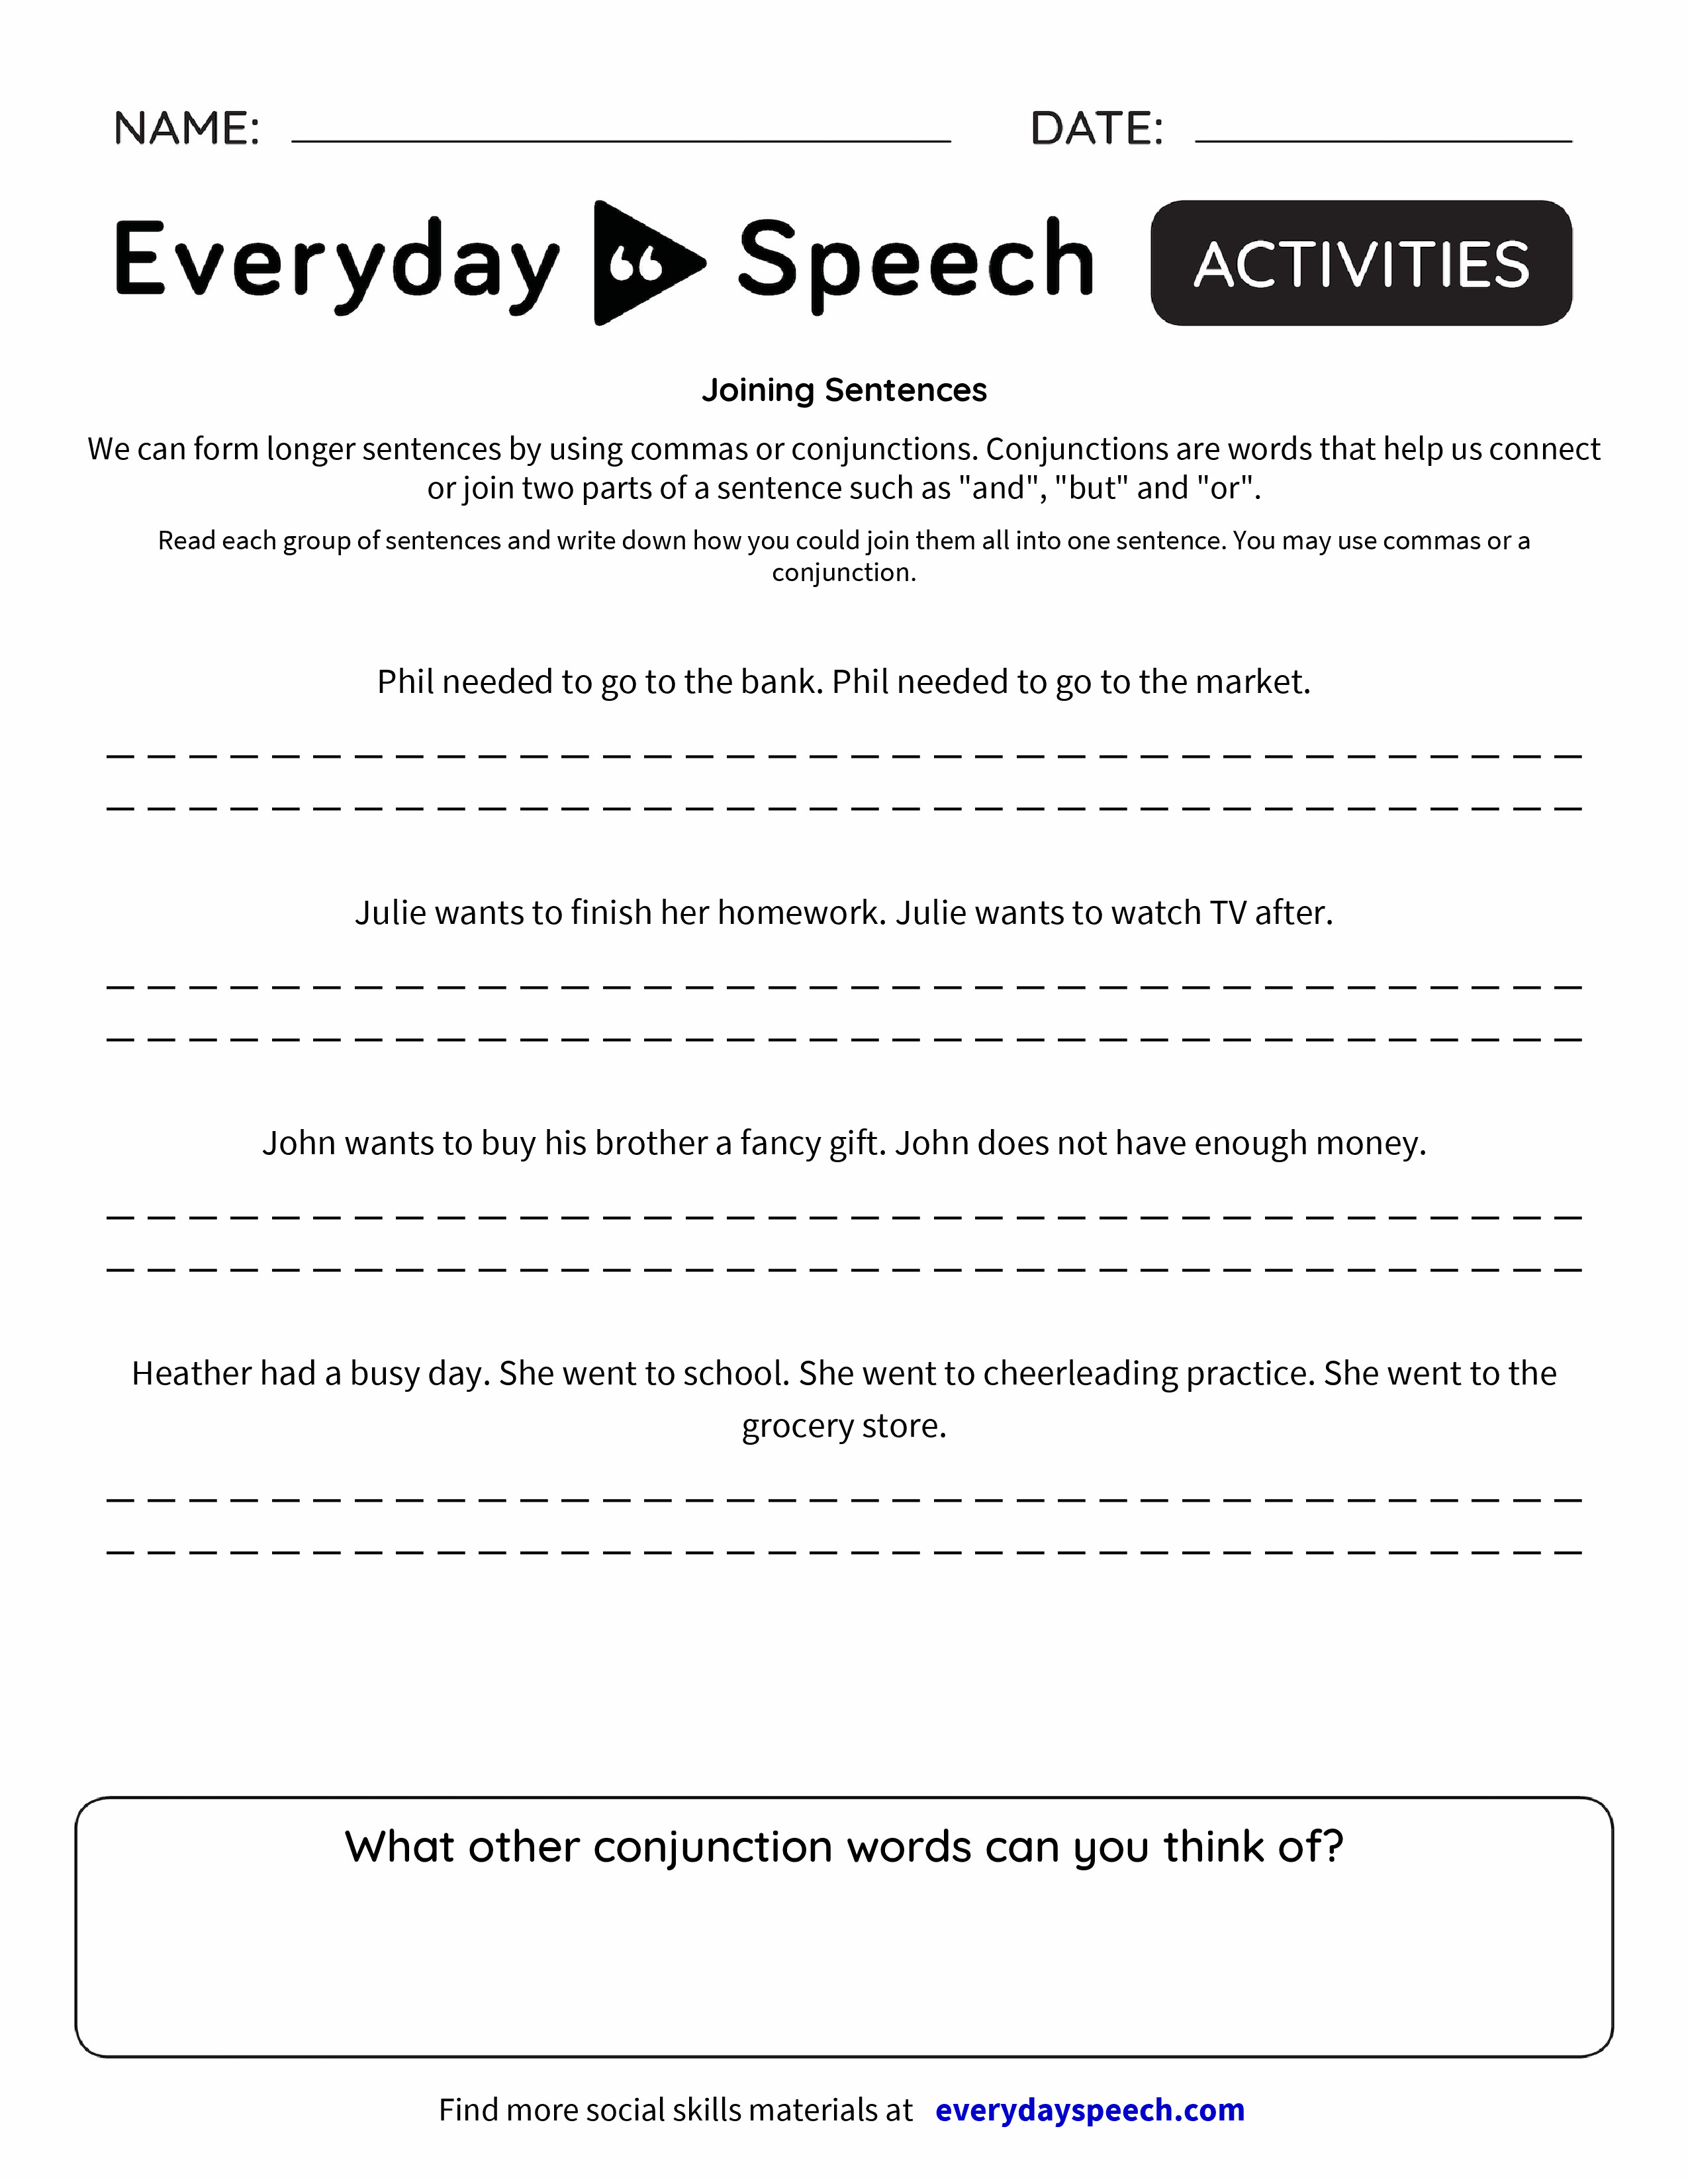 Joining Sentences Everyday Speech Everyday Speech